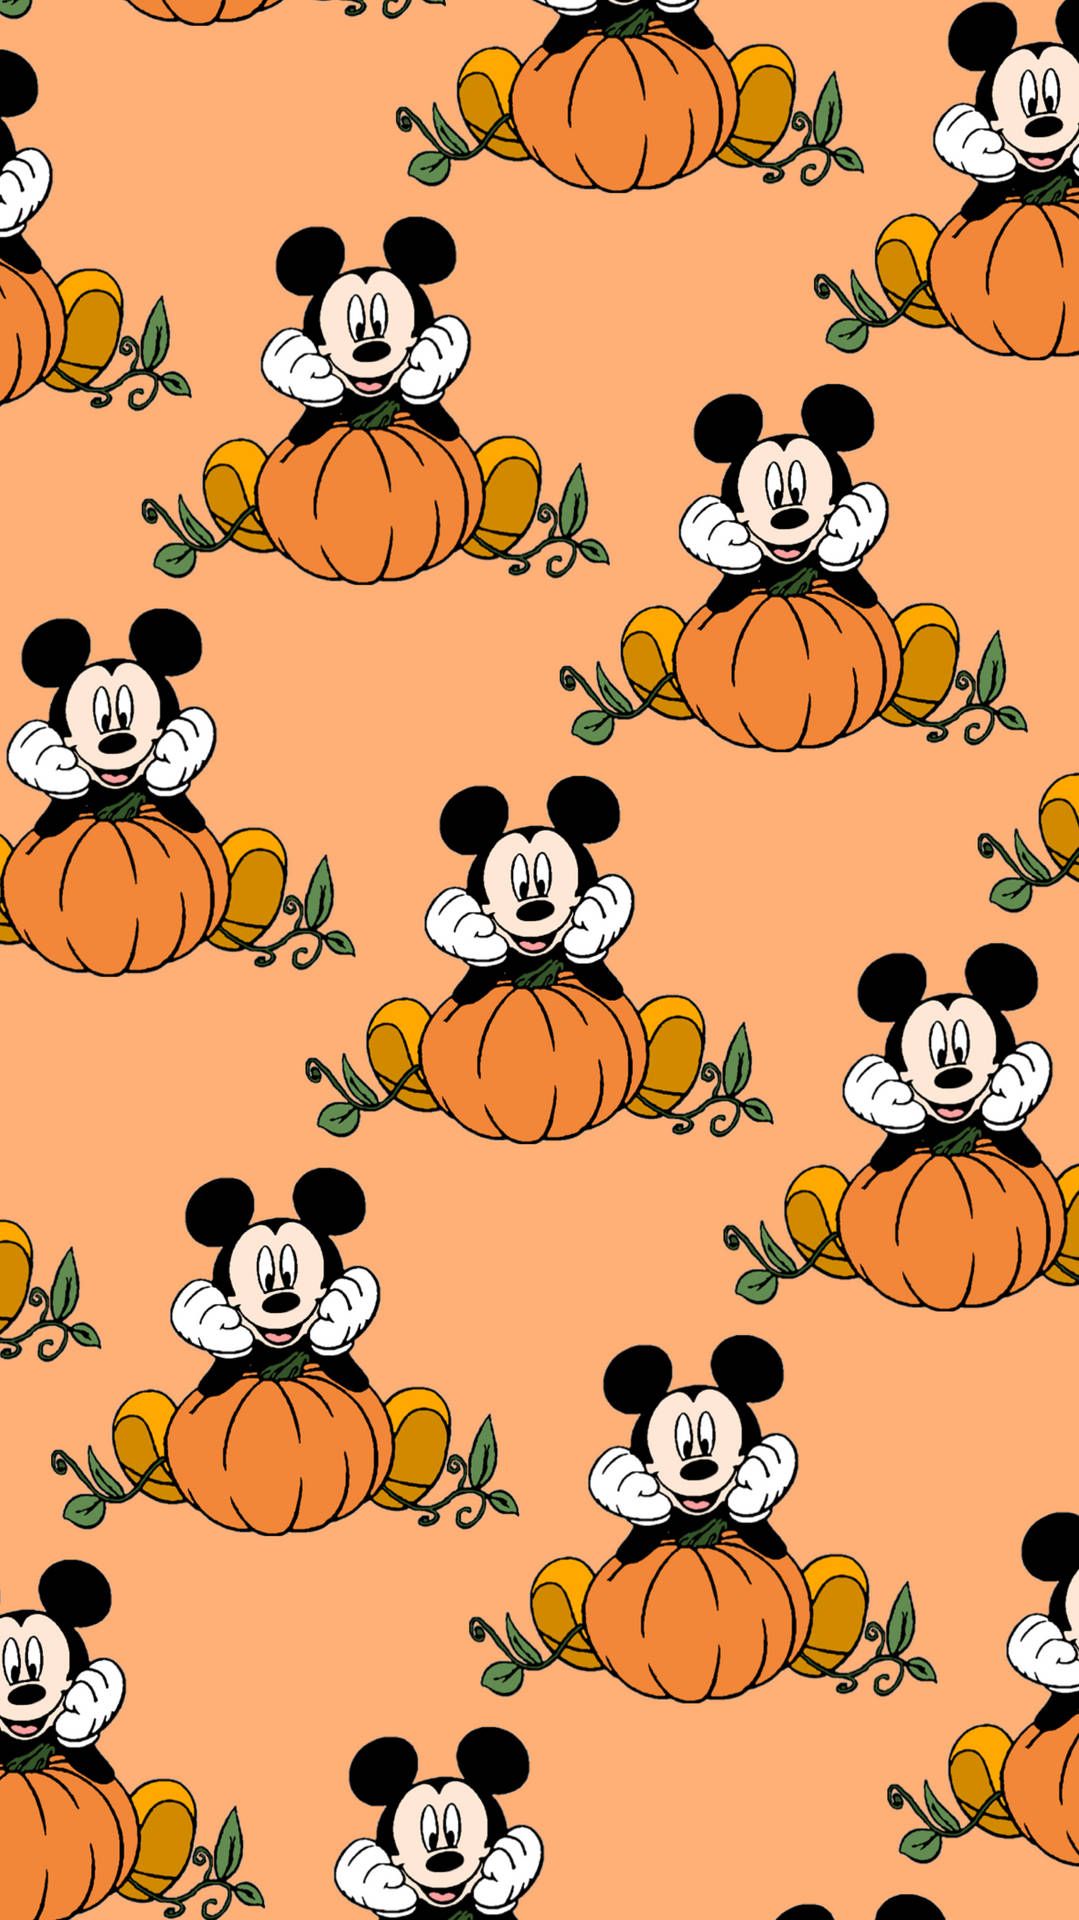 Disney Halloween Wallpaper Full HD, 4K Free to Use